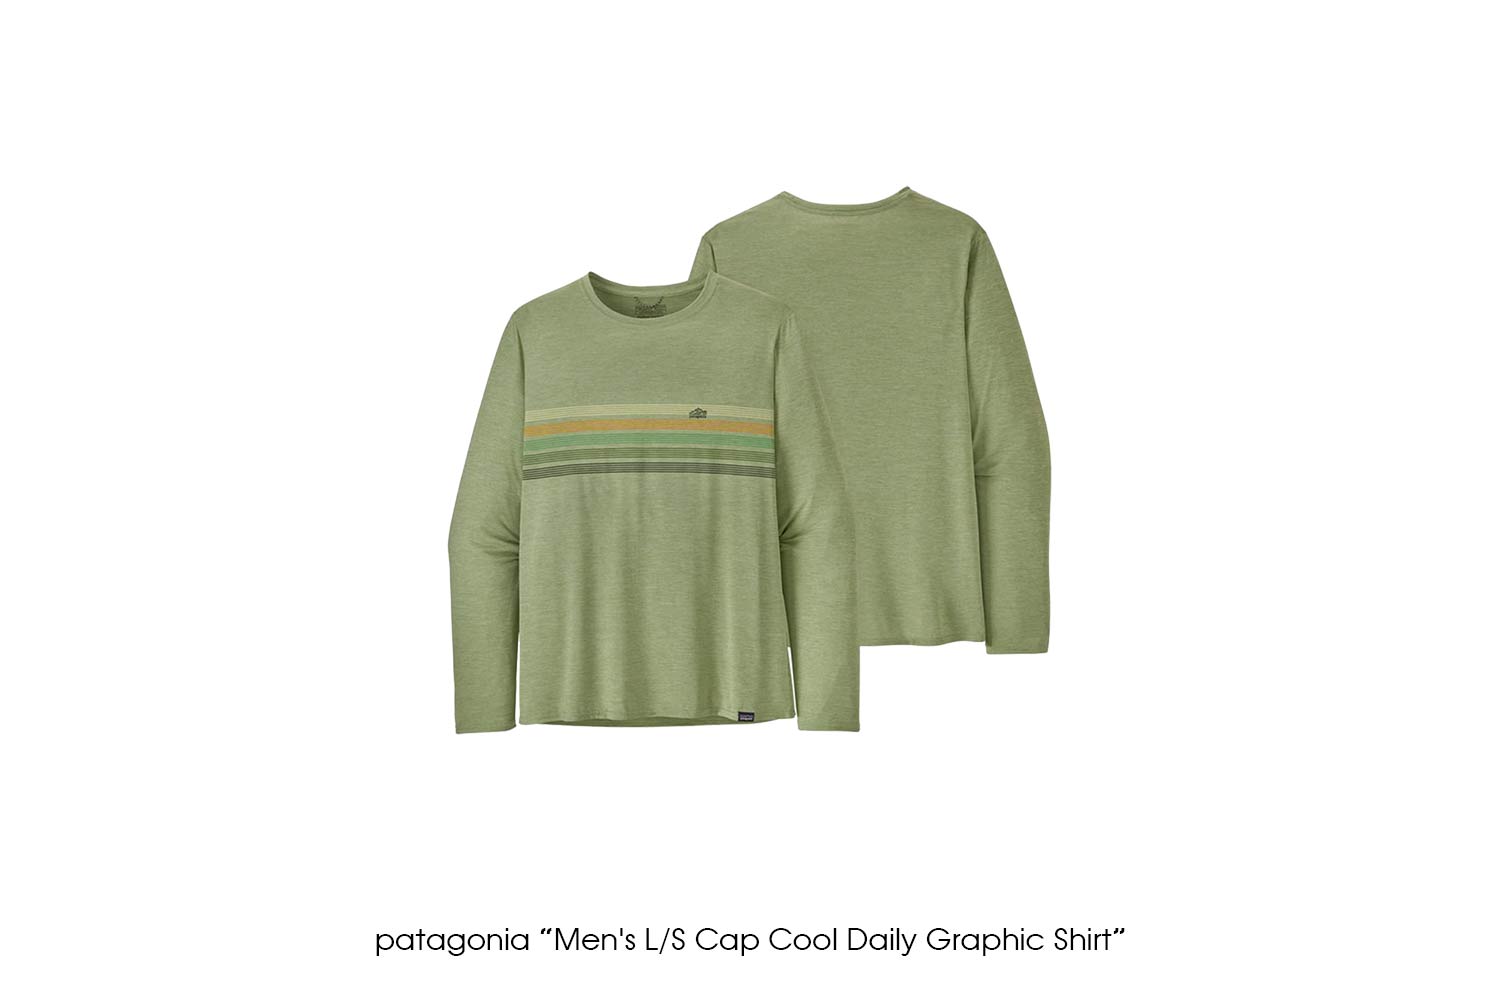 patagonia "Men's L/S Cap Cool Daily Graphic Shirt"